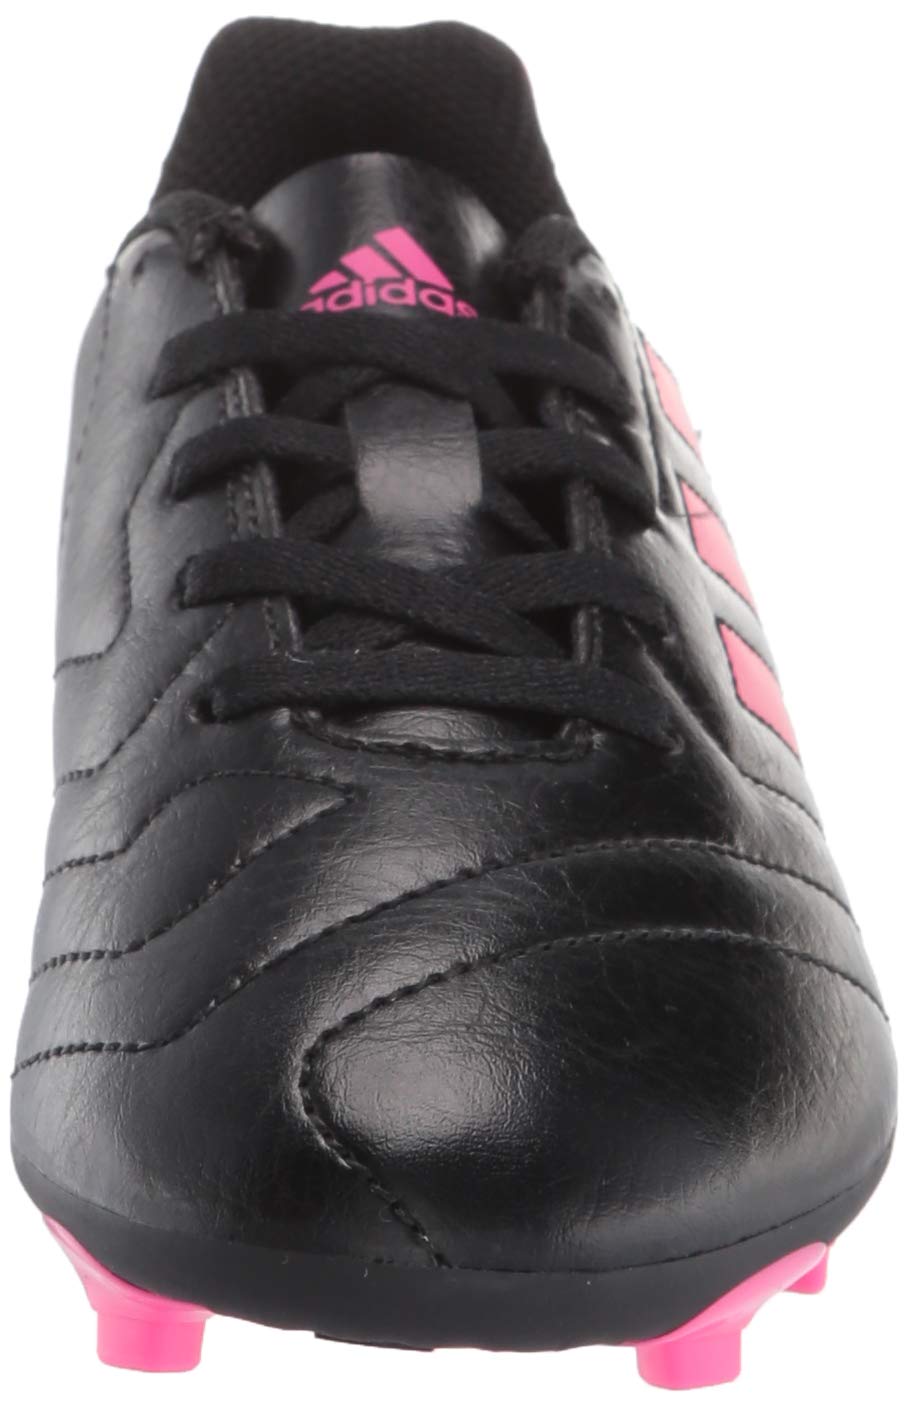 adidas Unisex-Child Goletto VII Firm Ground Cleats Football Shoe